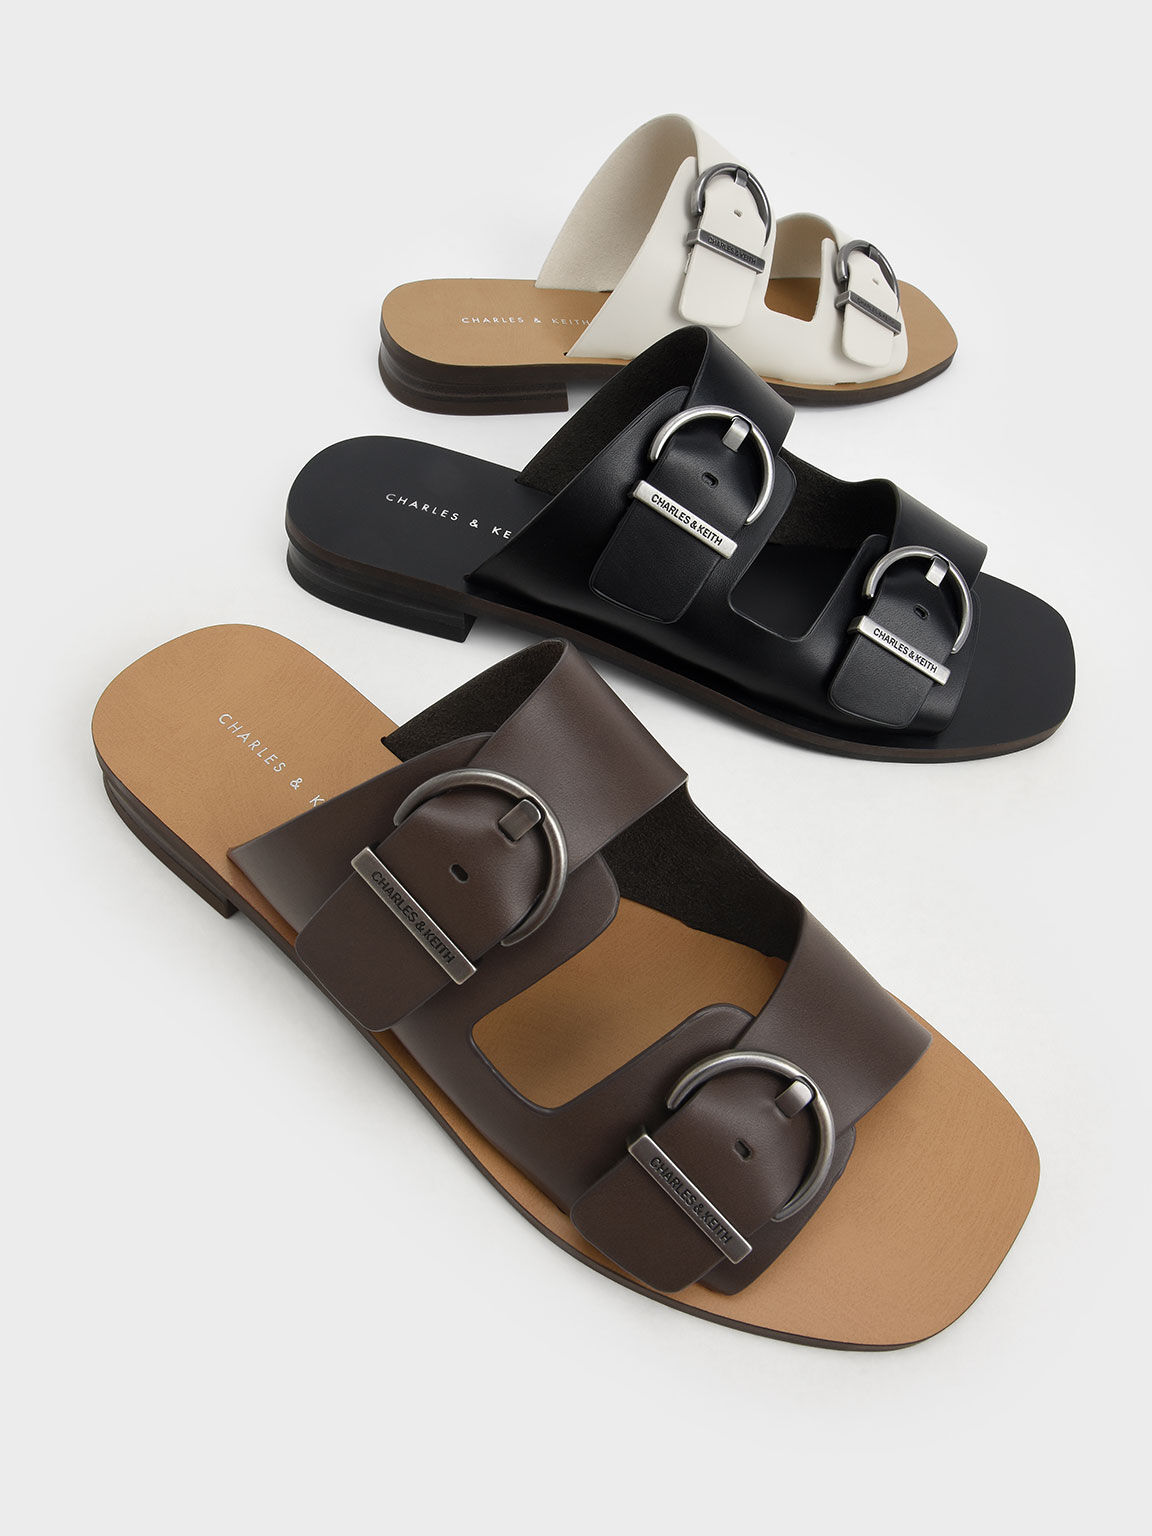 Double Buckle Strap Slide Sandals, Dark Brown, hi-res